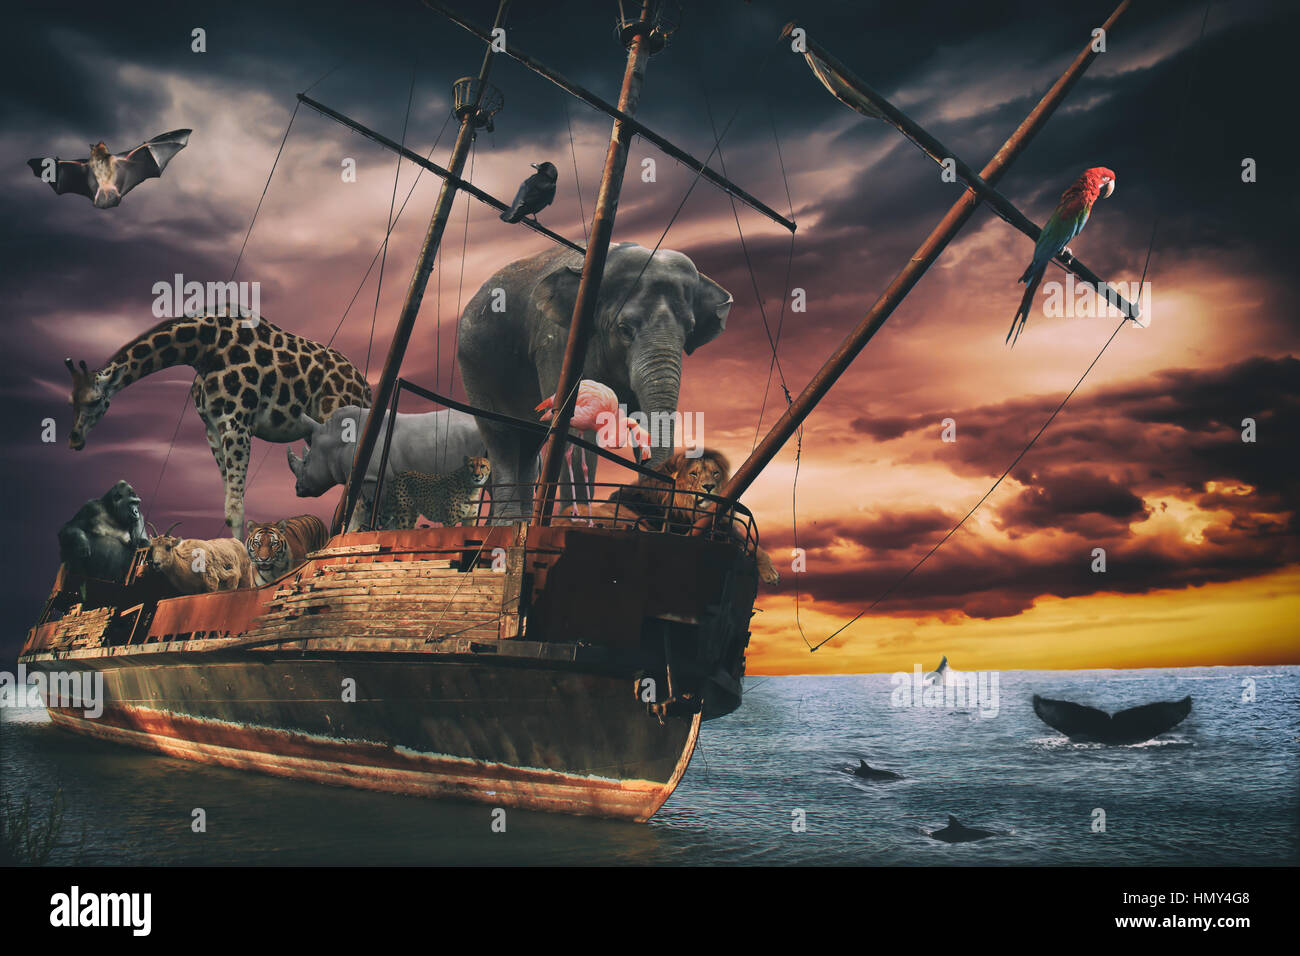 Noahs Ark Fantasy Animal Ship. Several exotic animals traveling on a old wooden ship. Biblical Noah's ark, or environmental concept. Stock Photo